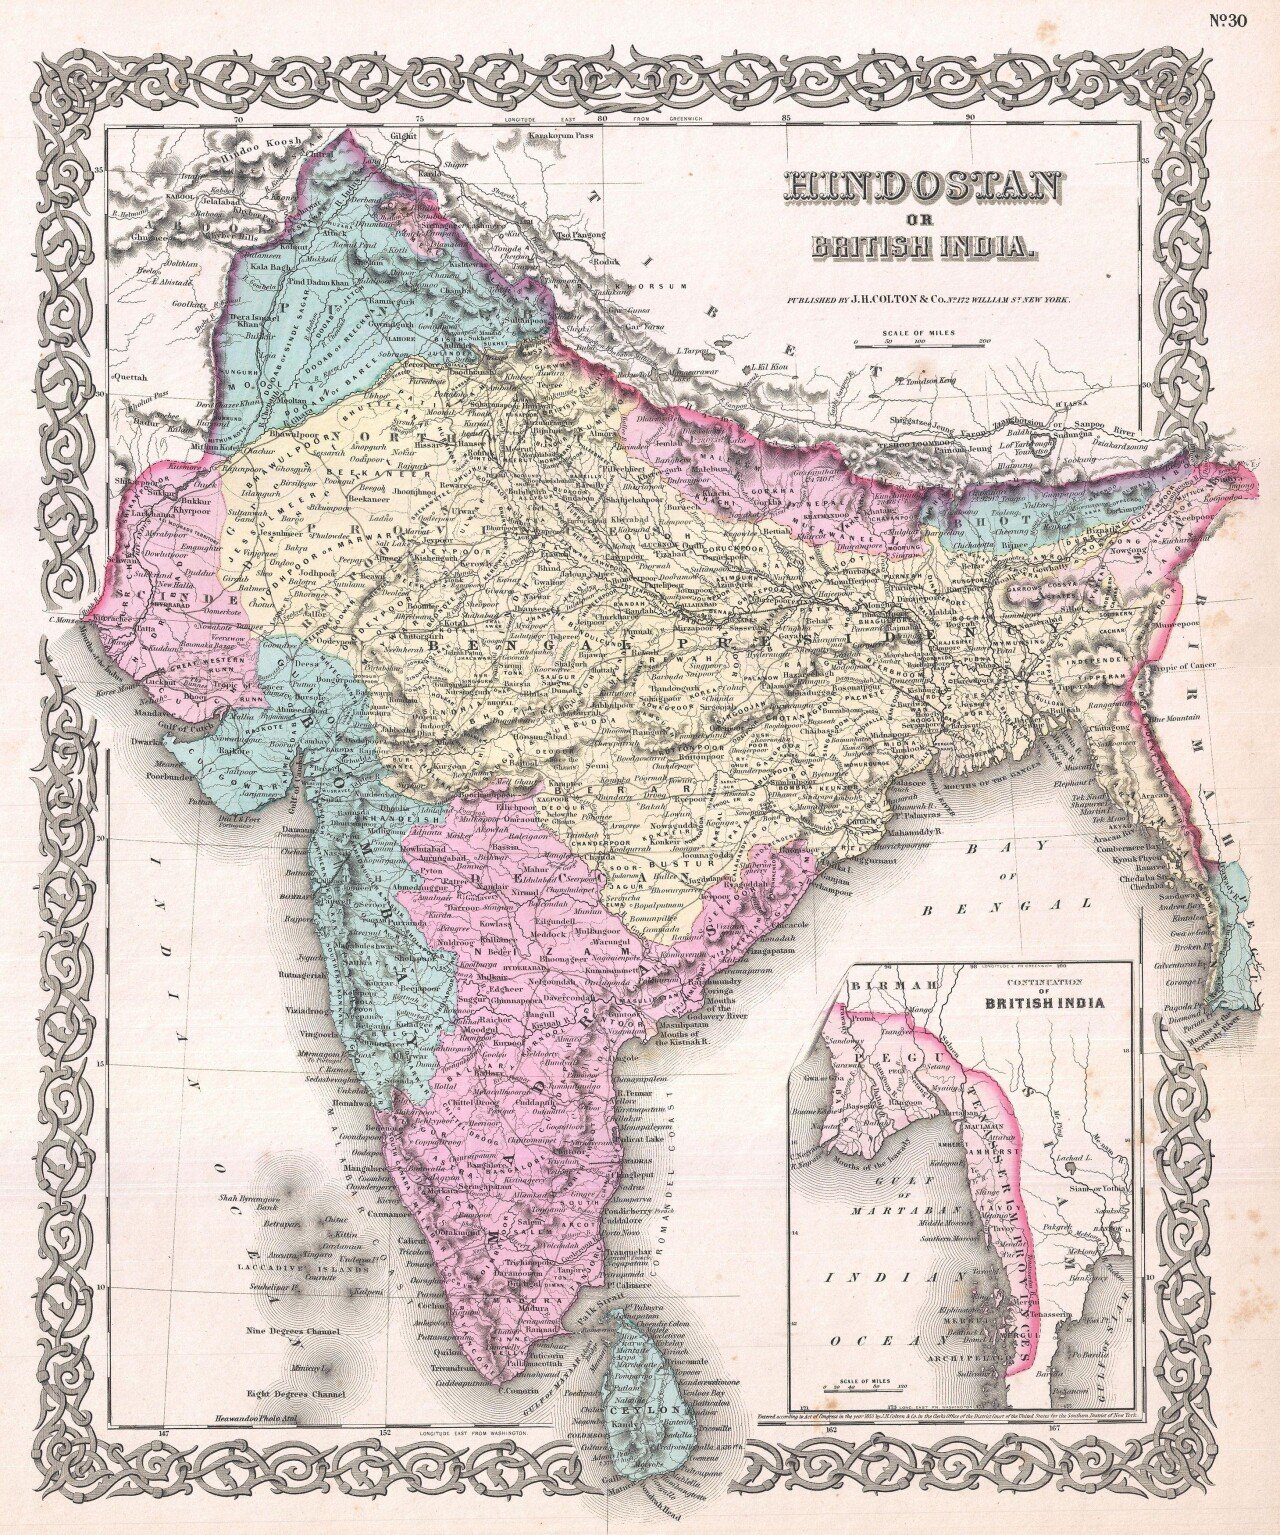 Colton Map of India (1855).jpg 대동여지도(1861)가 나오던 시기의 영국의 지도는 어땠을까?